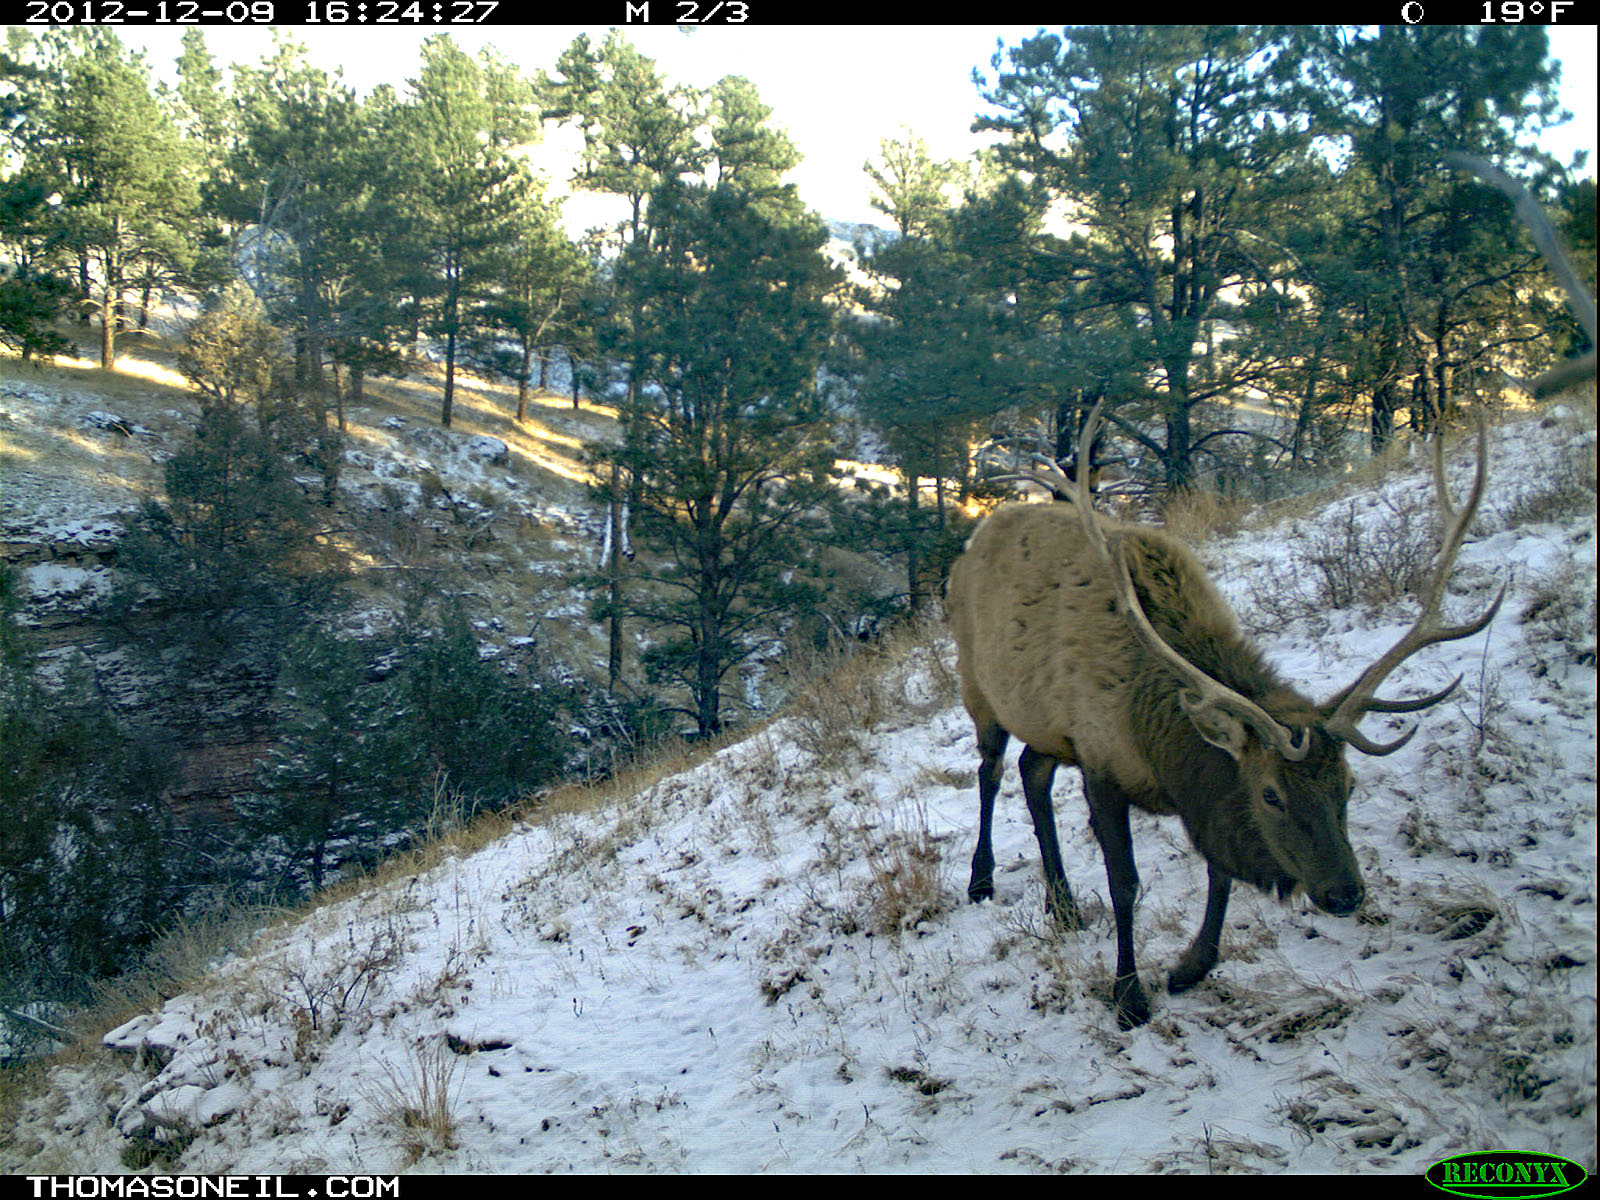 Elk, trailcam photo from Dec. 9, 2012, Wind Cave National Park, South Dakota.  Click for next photo.